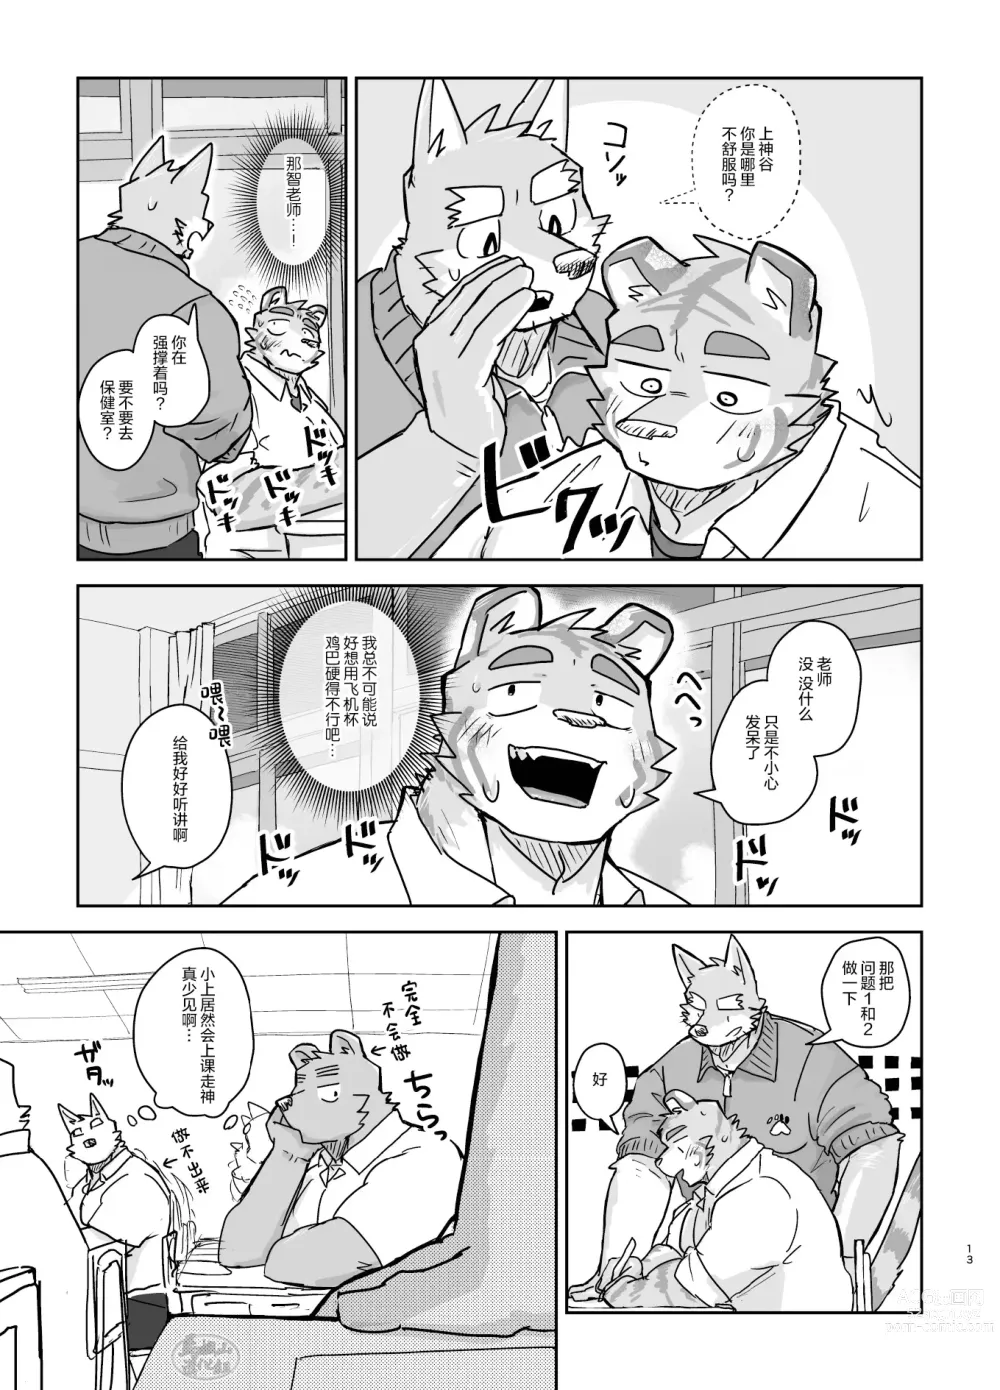 Page 13 of doujinshi 关于我在教室被榨精这件事